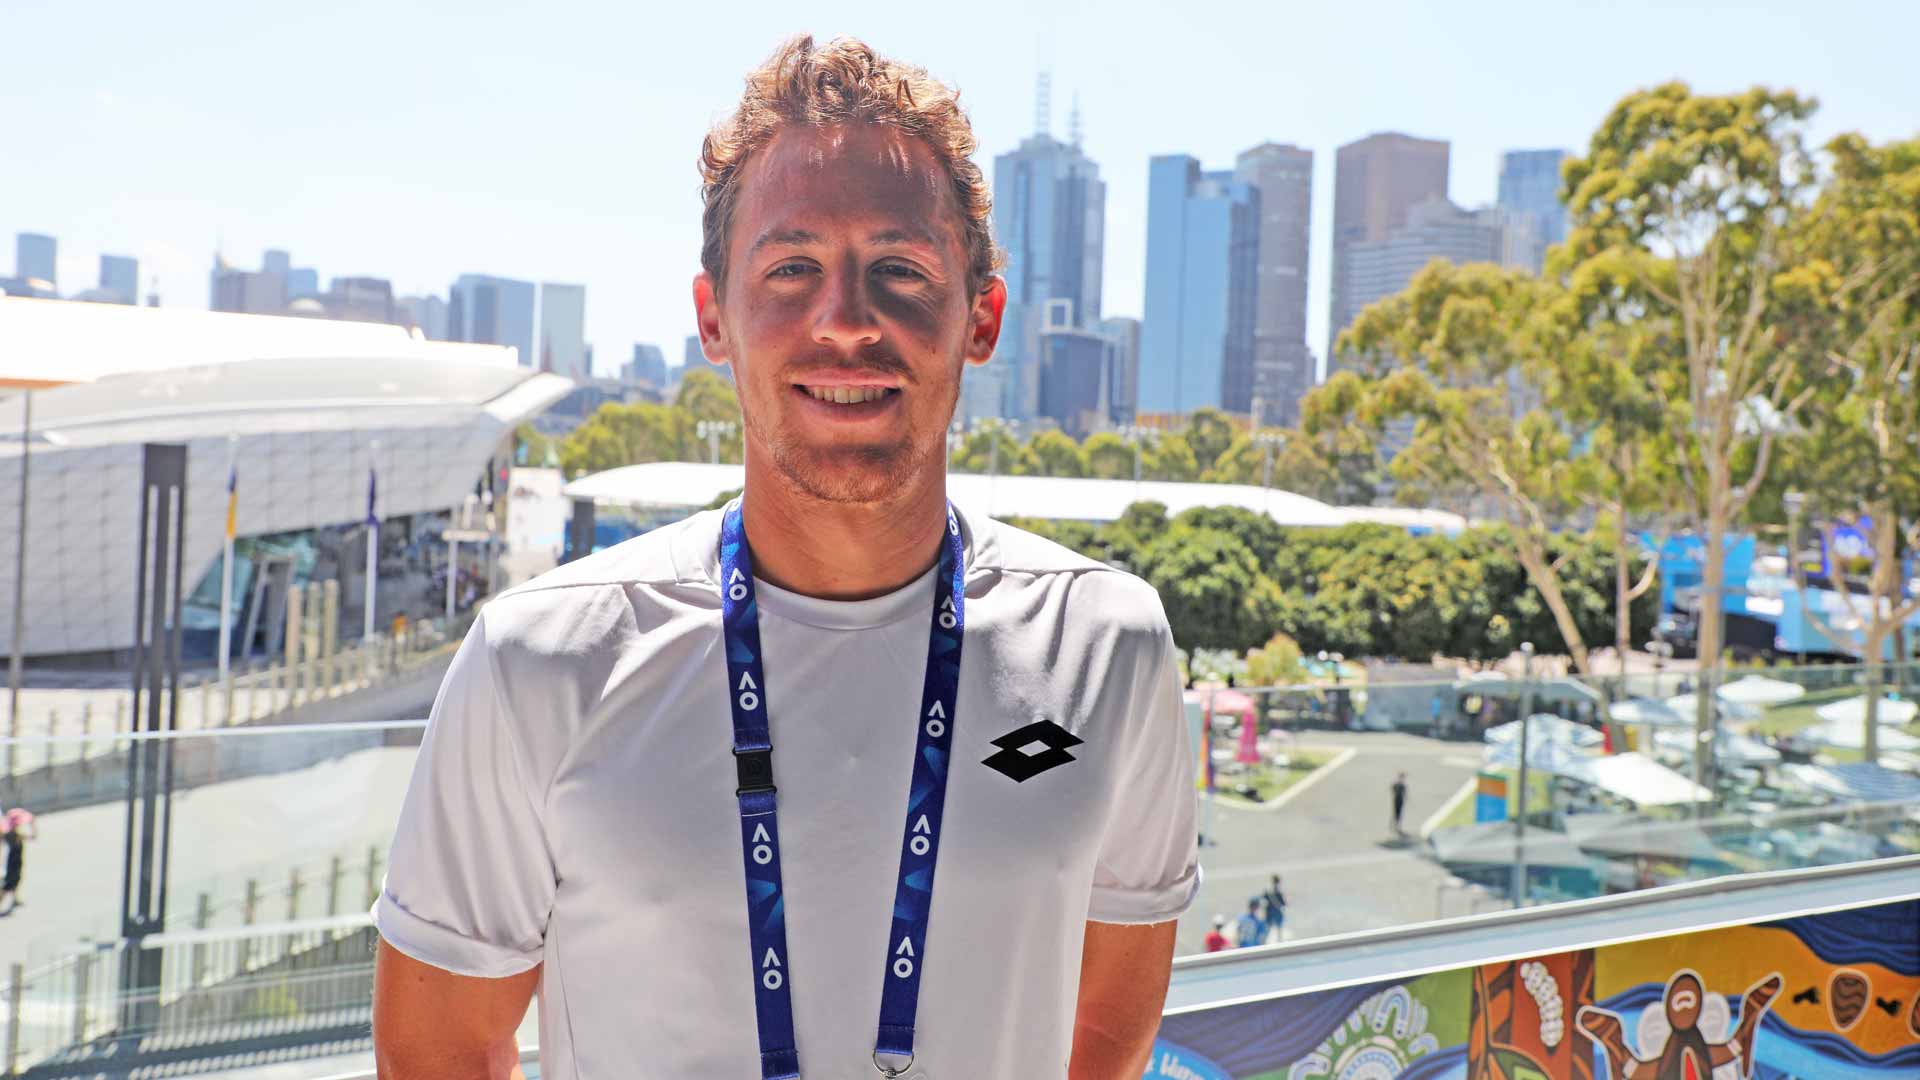 Roberto Carballés Baena jugará frente a Novak Djokovic por segunda vez en un Grand Slam este martes en Melbourne.